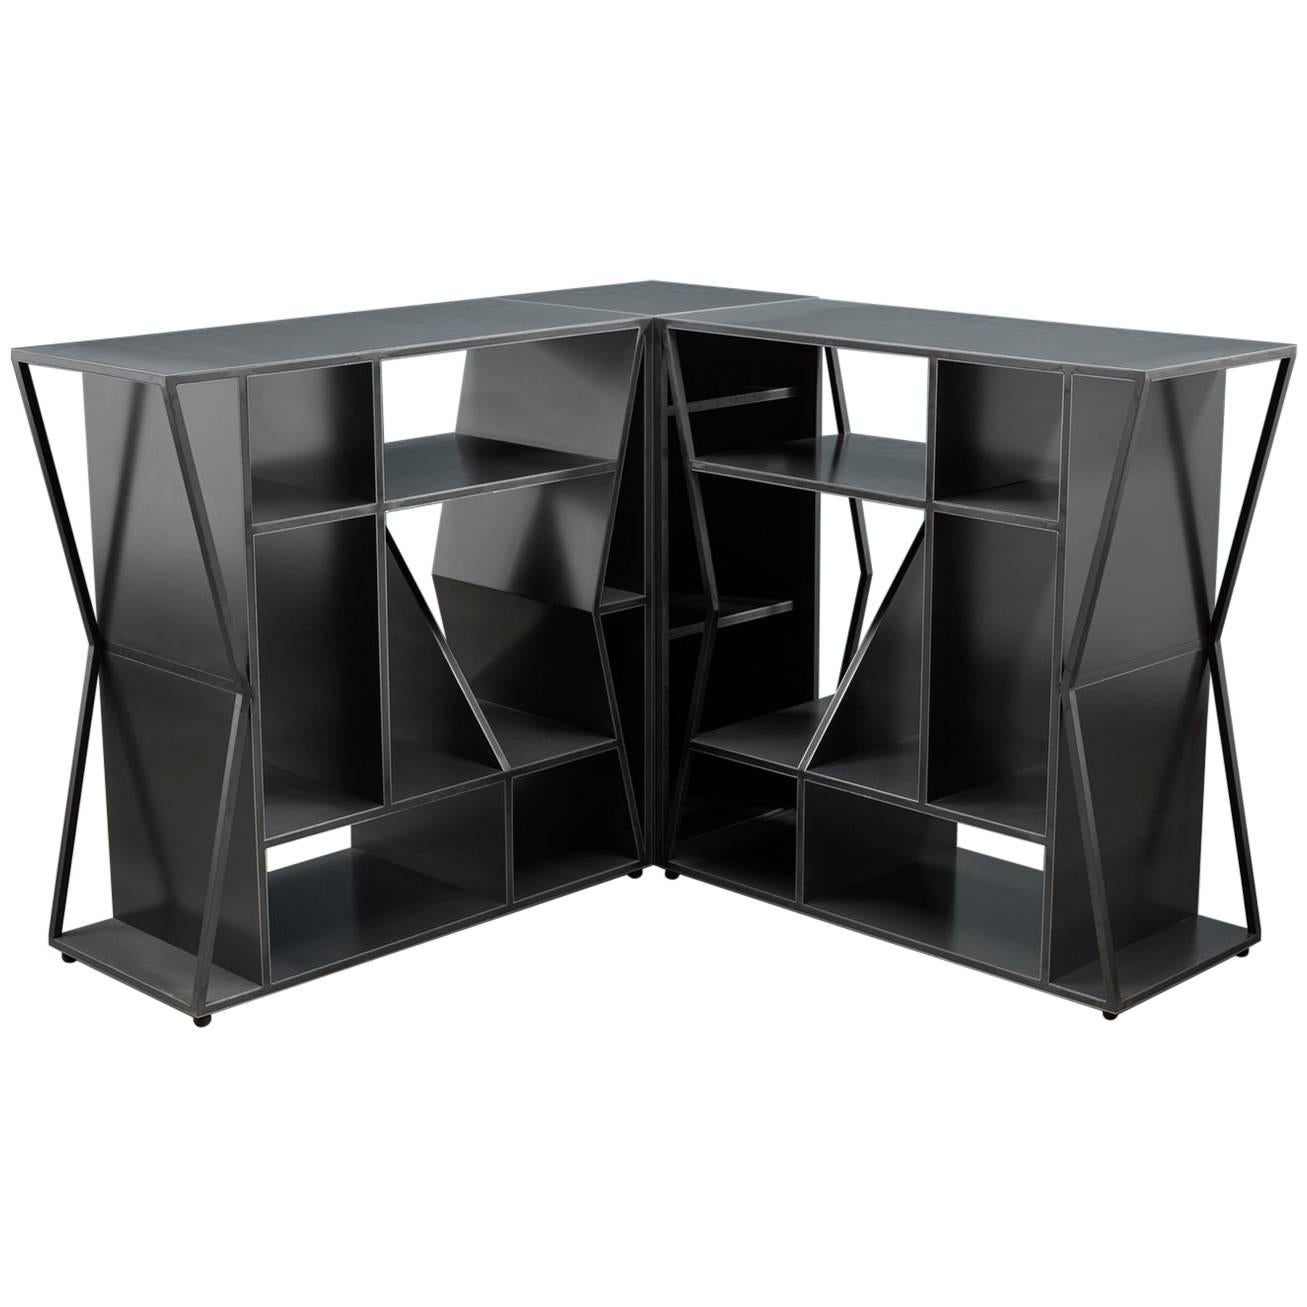 Meridian Modular Credenza, Trio, Modern Steel Corner Cabinet, by Force/Collide For Sale